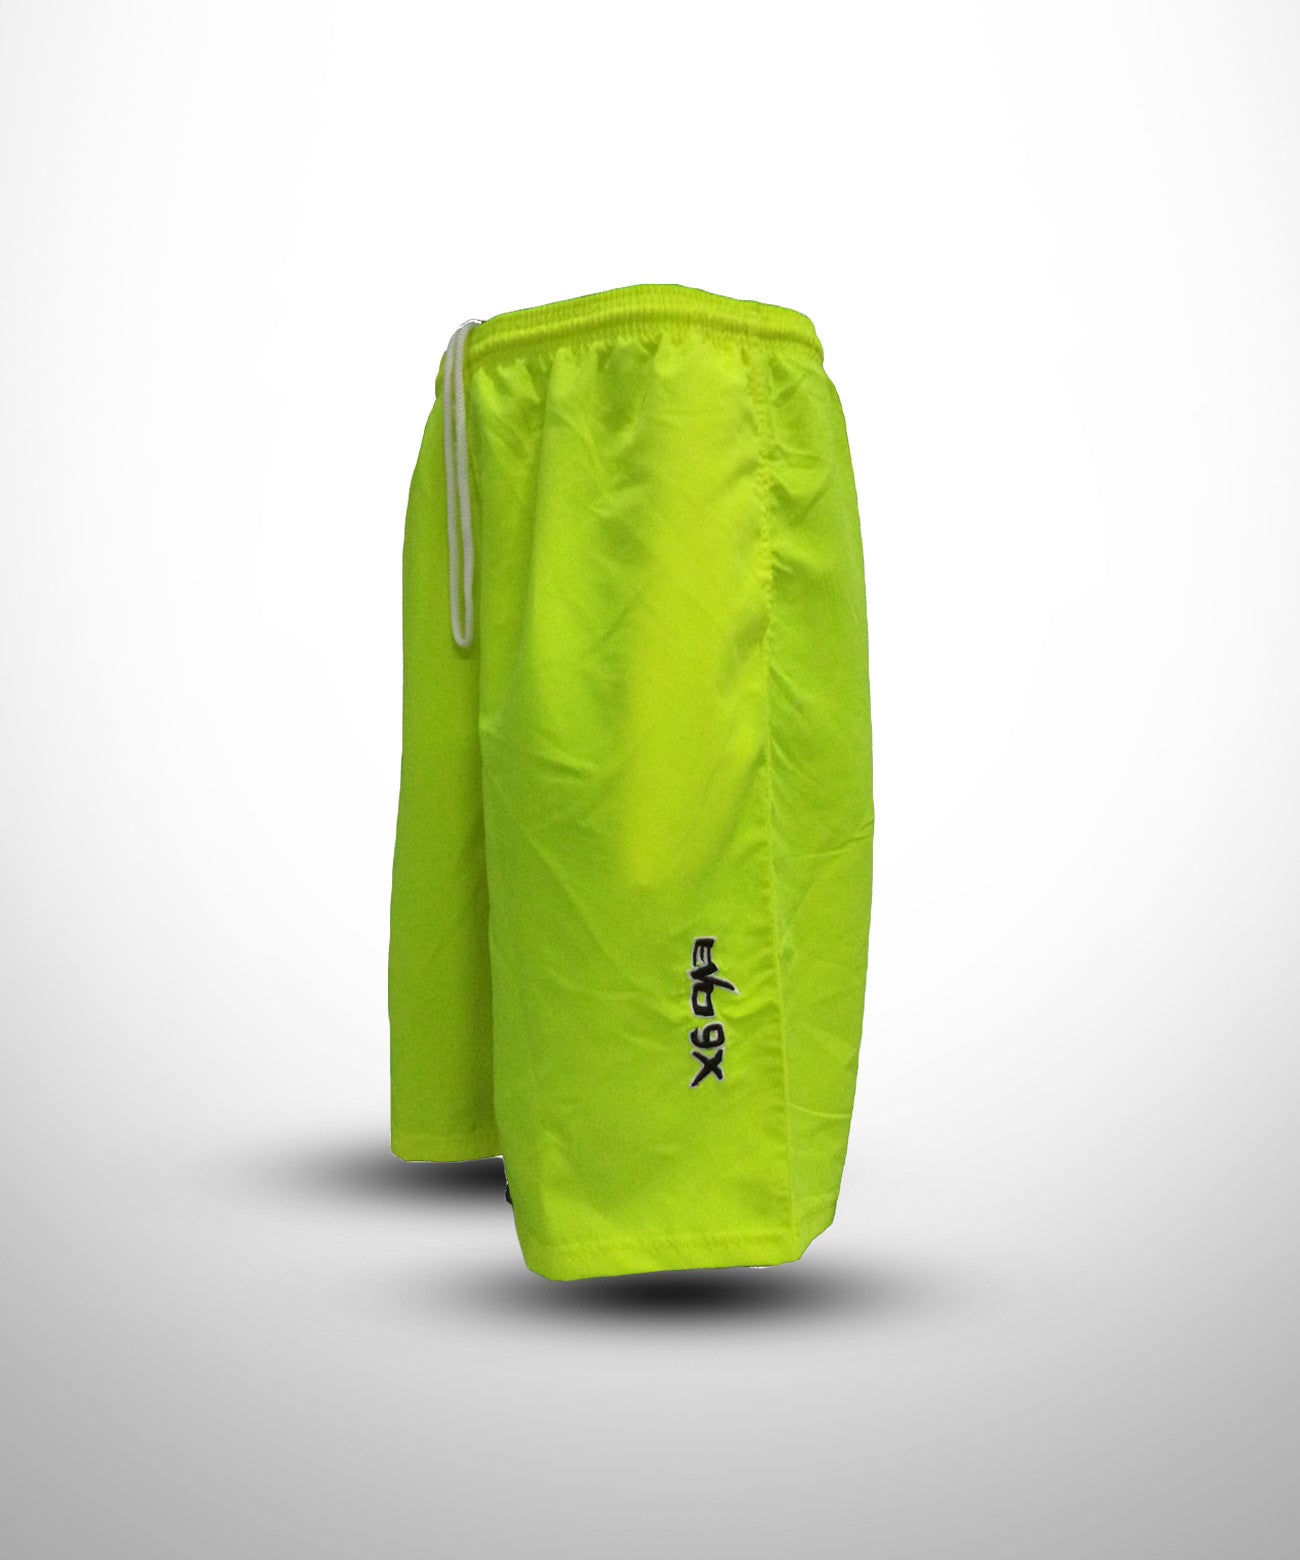 Yellow Semi Micro Fiber Shorts K9 for Warriors - Evo9x Store